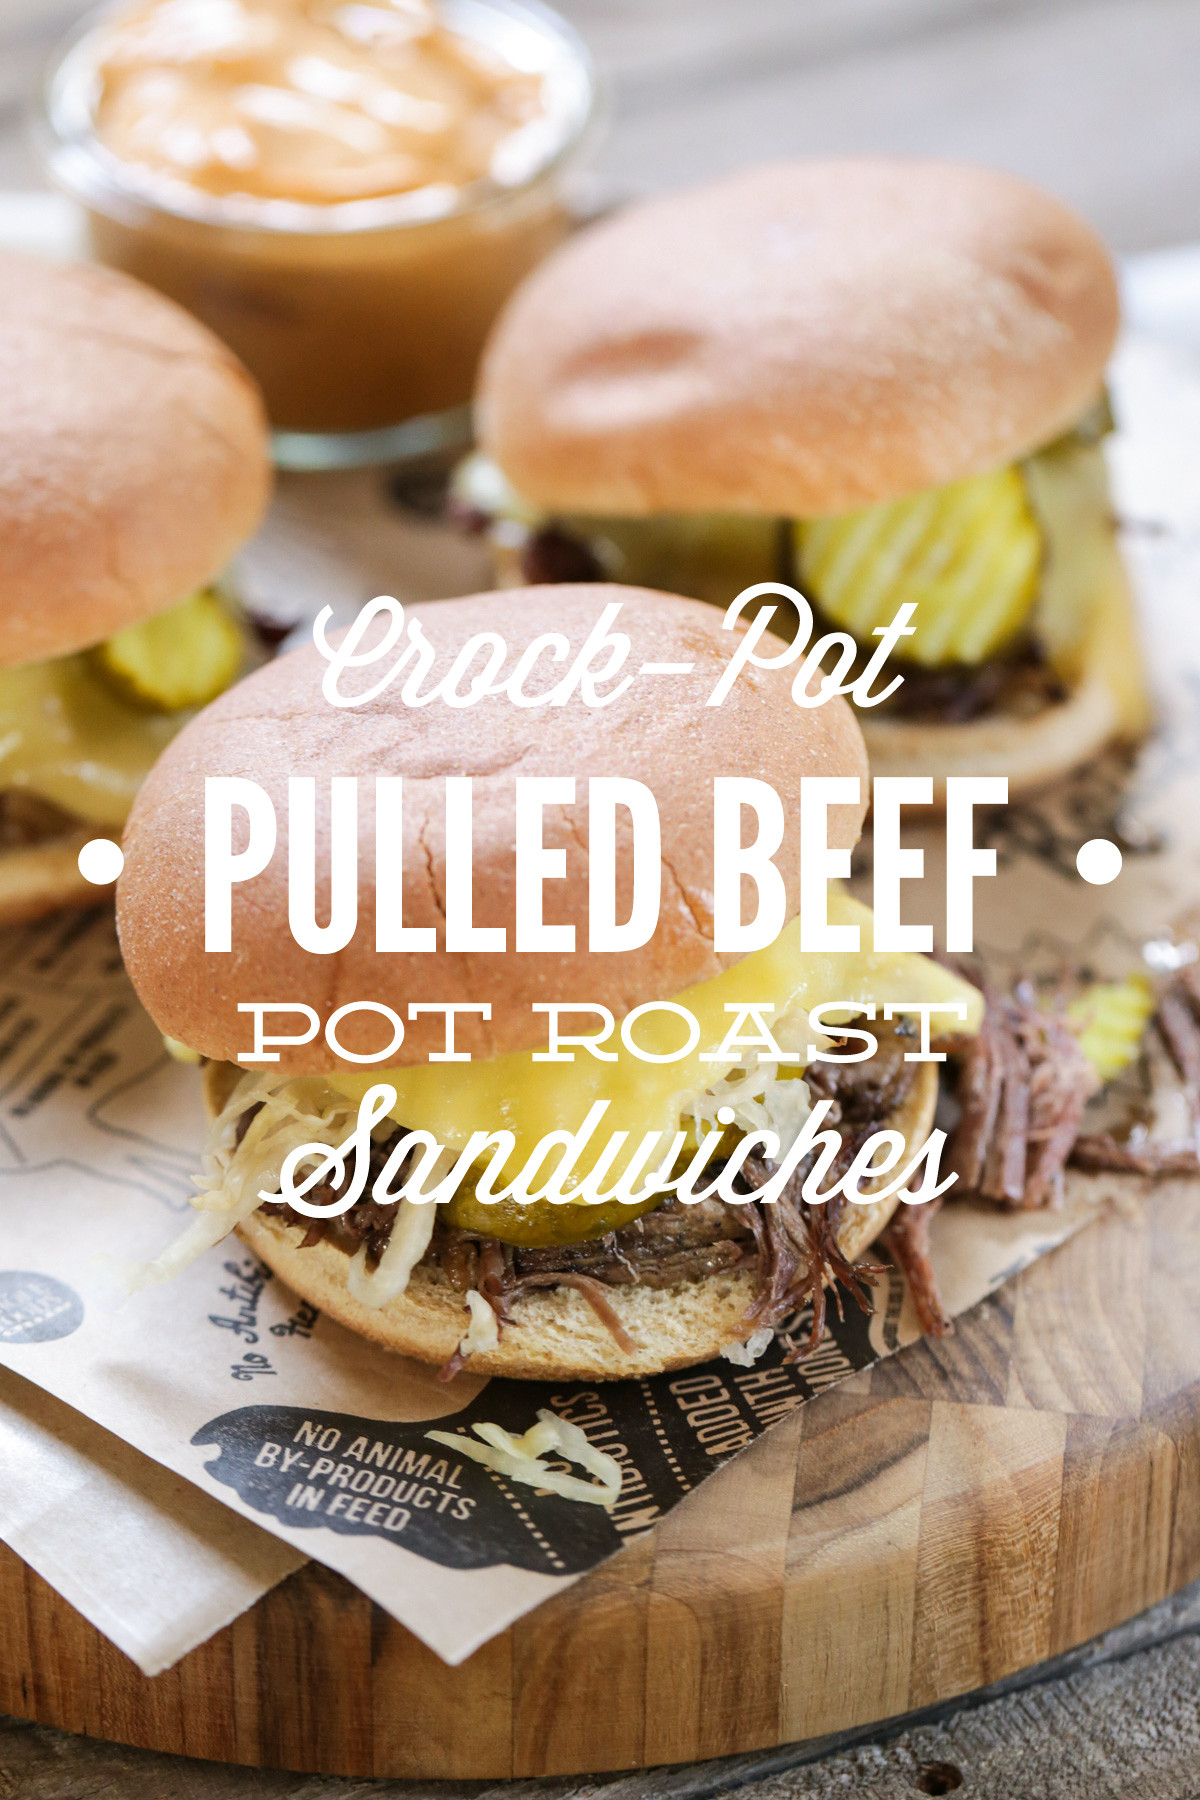 Crockpot Roast Beef Sandwiches Recipe
 Crock Pot Pulled Beef Pot Roast Sandwiches Live Simply